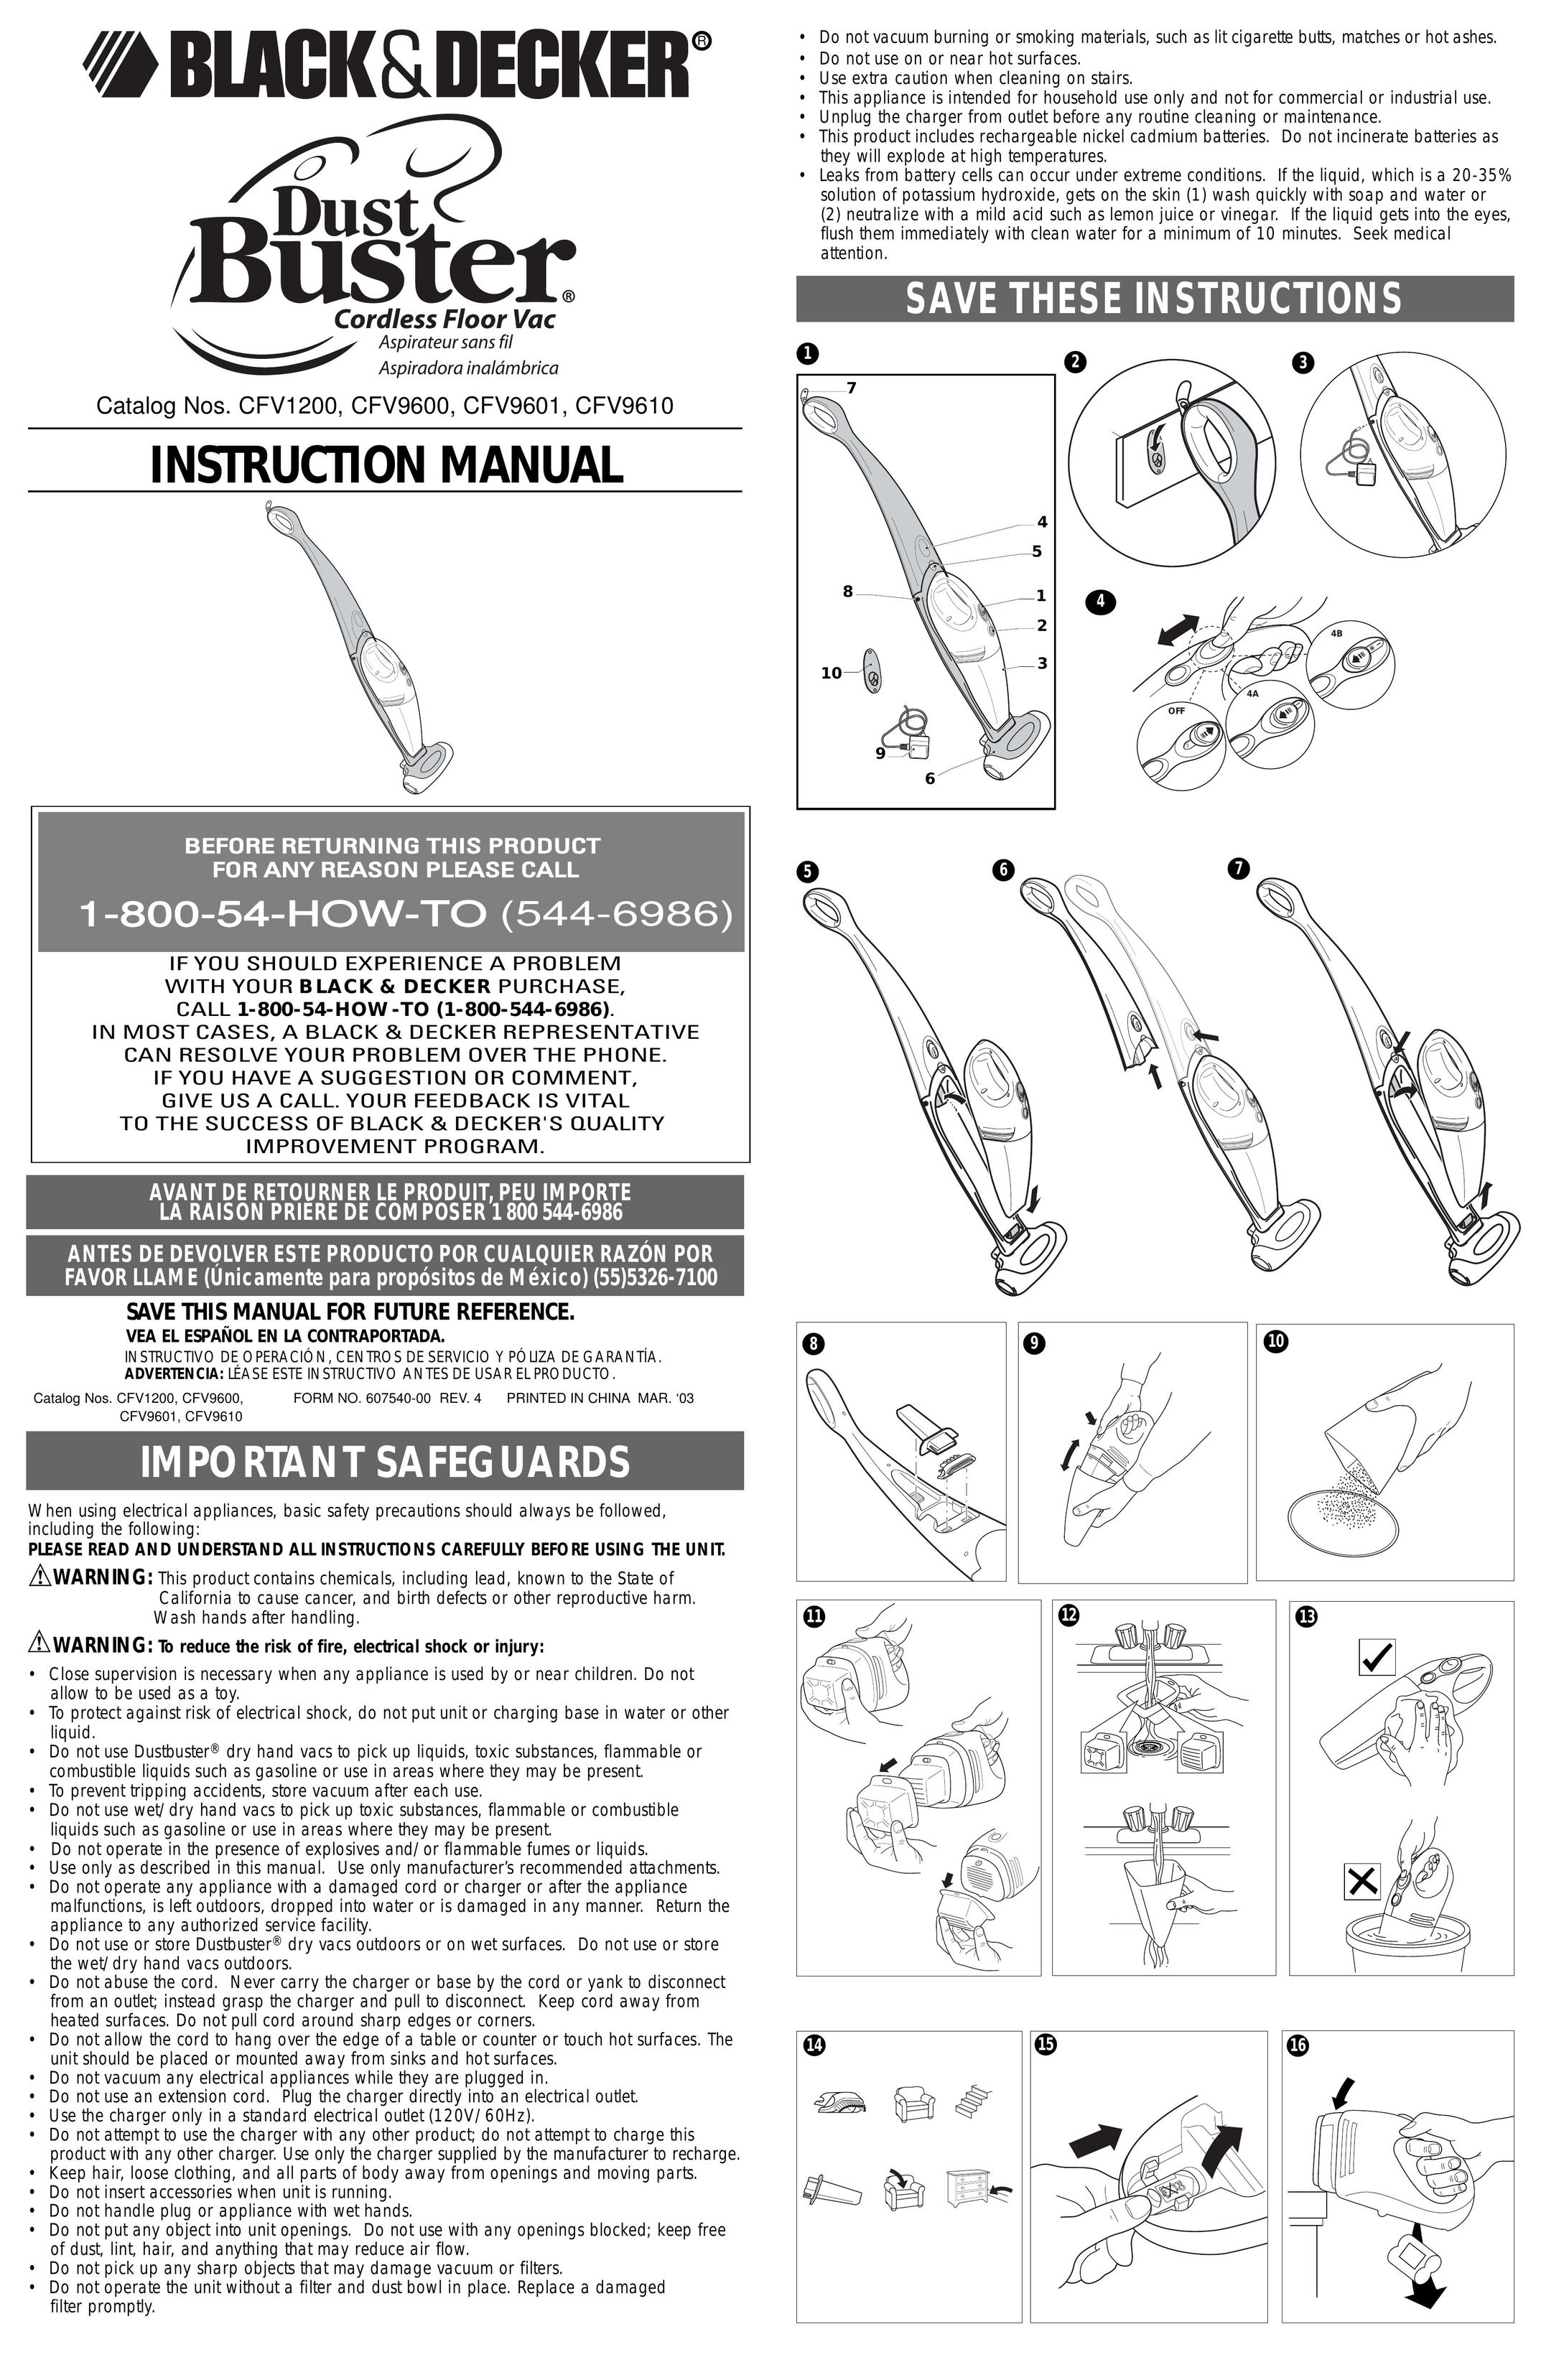 Black & Decker 607540-00 Vacuum Cleaner User Manual